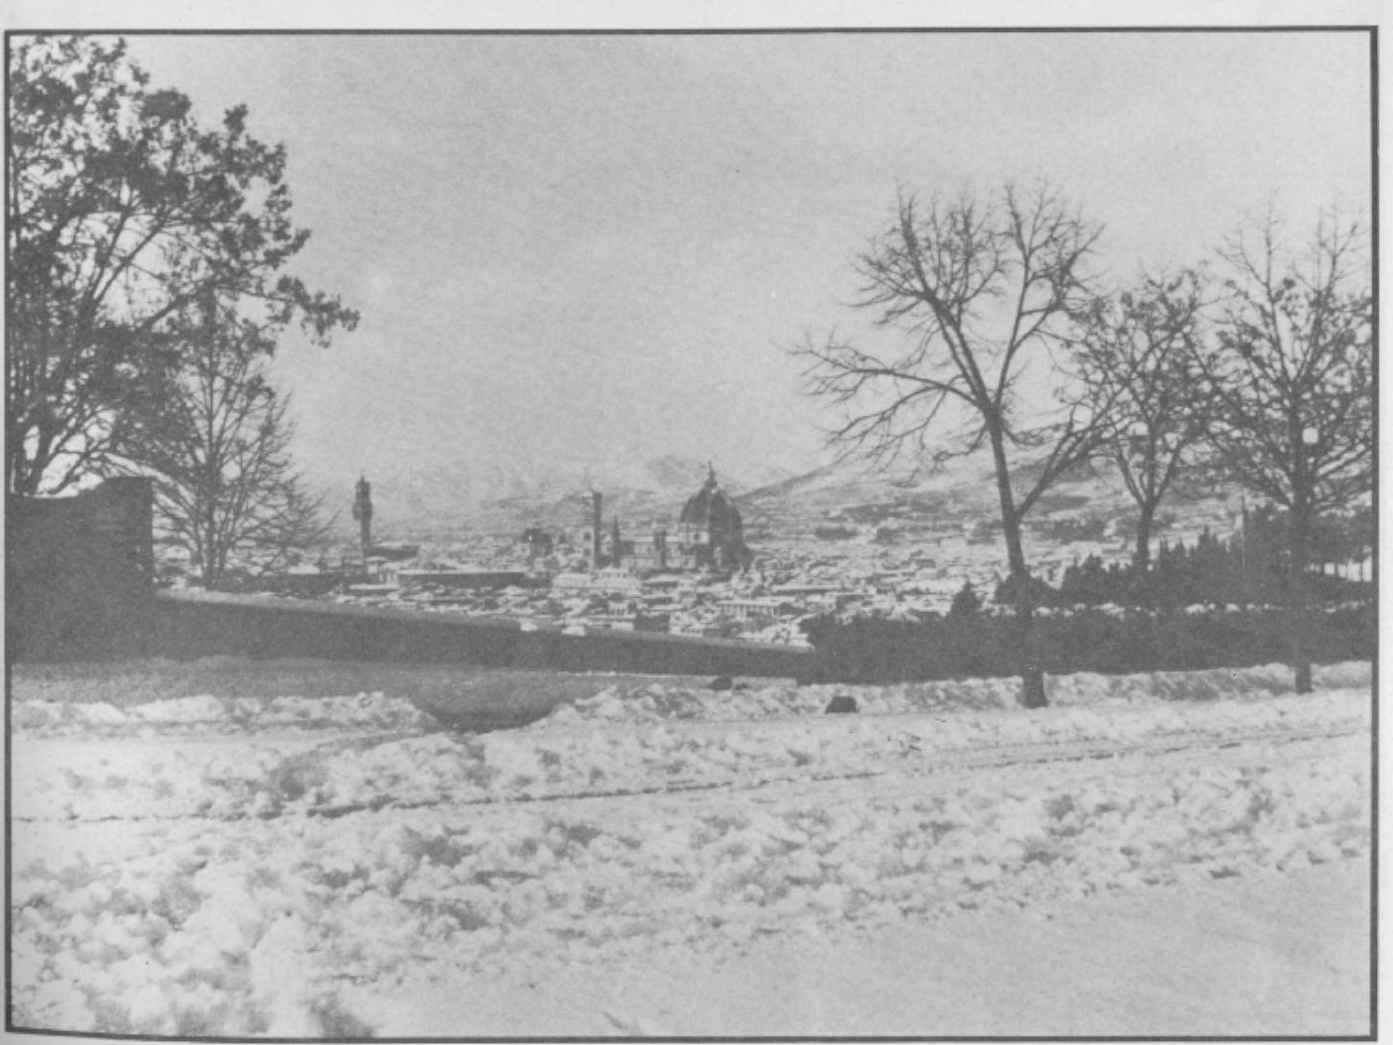 neve a firenze nel 1915, vista dal Piazzale Michelangelo